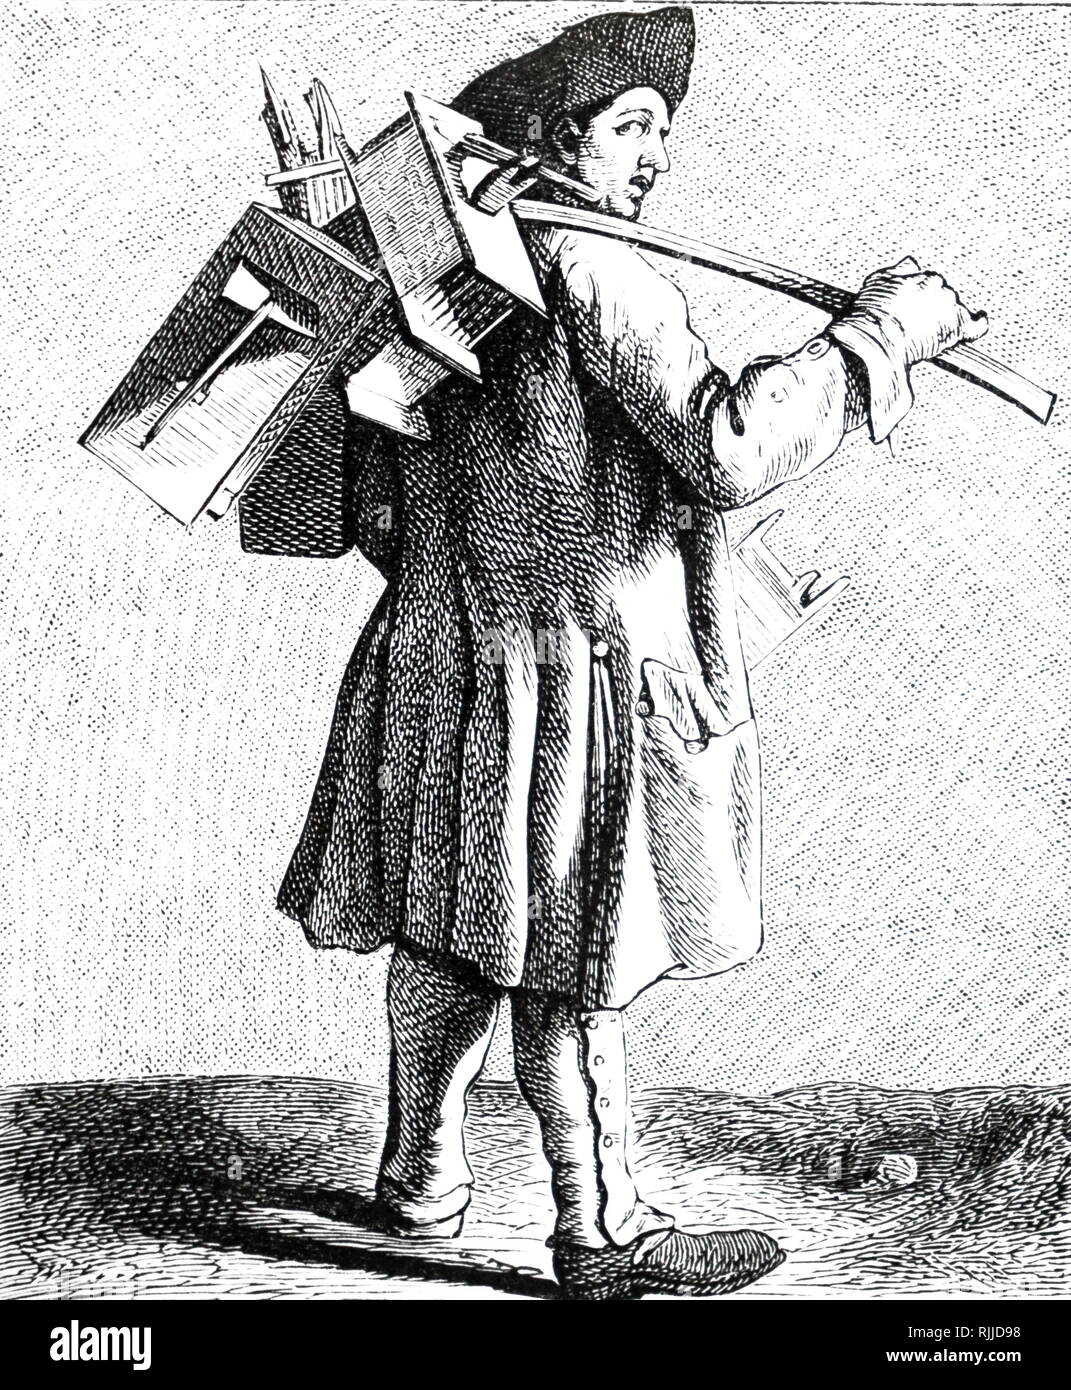 https://c8.alamy.com/comp/RJJD98/a-woodcut-engraving-depicting-a-ratcatcher-dated-18th-century-RJJD98.jpg